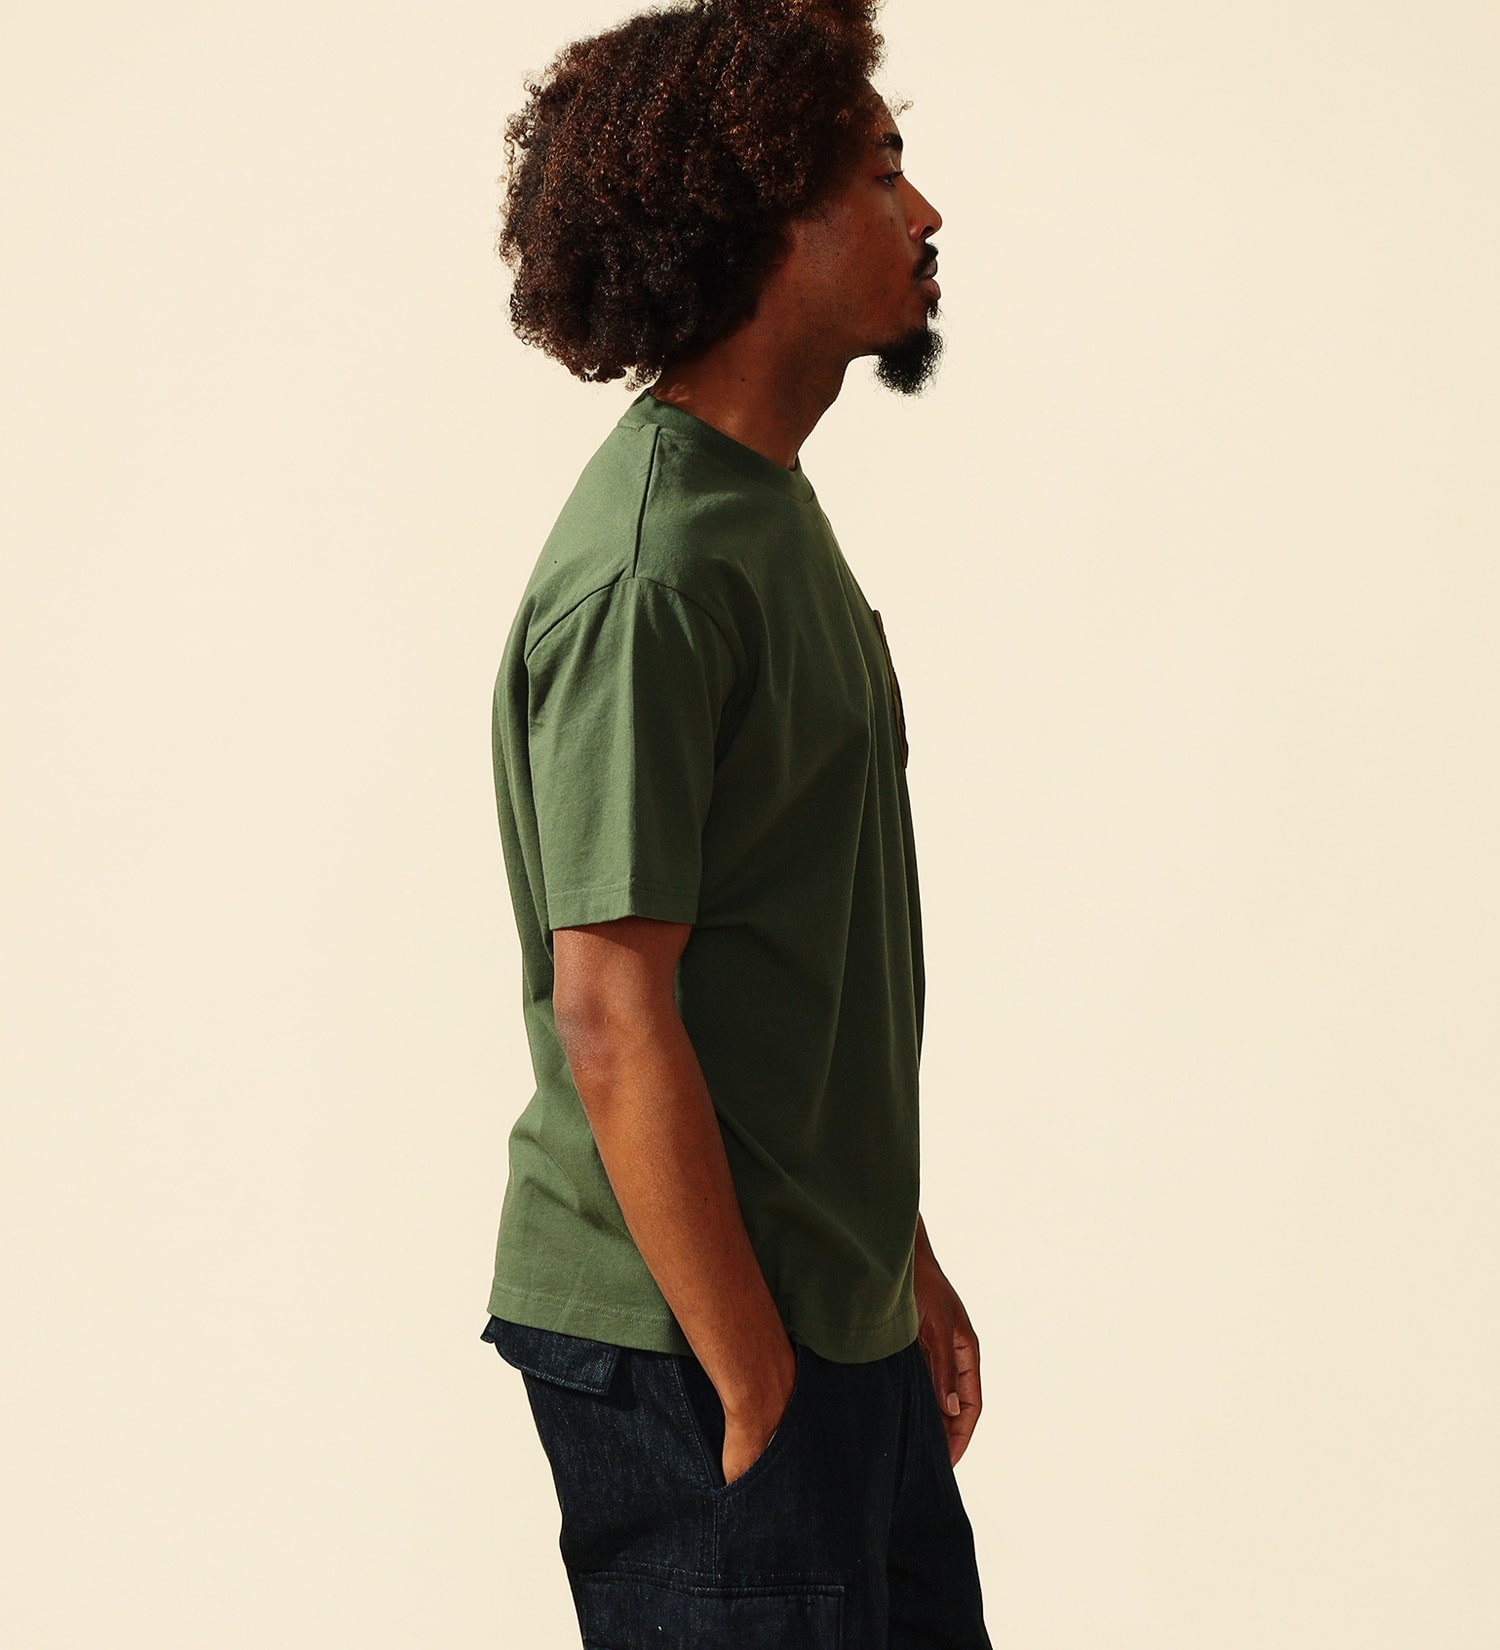 ALPHA(アルファ)のユーティリティーポケットTシャツ 半袖|トップス/Tシャツ/カットソー/メンズ|アーミー